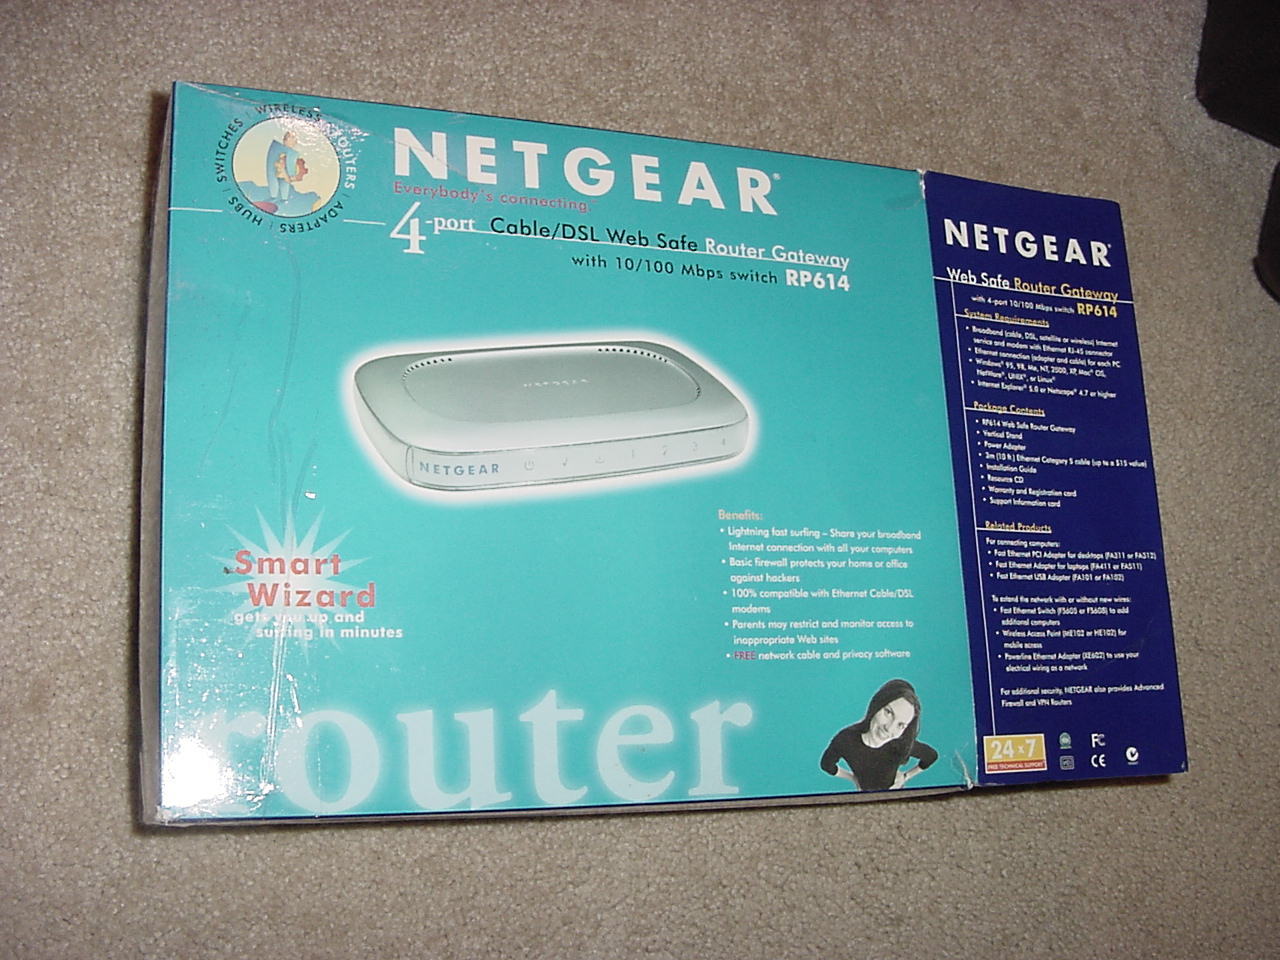 RP614NA - NETGEAR RP614 Web Safe Router Gateway- Router